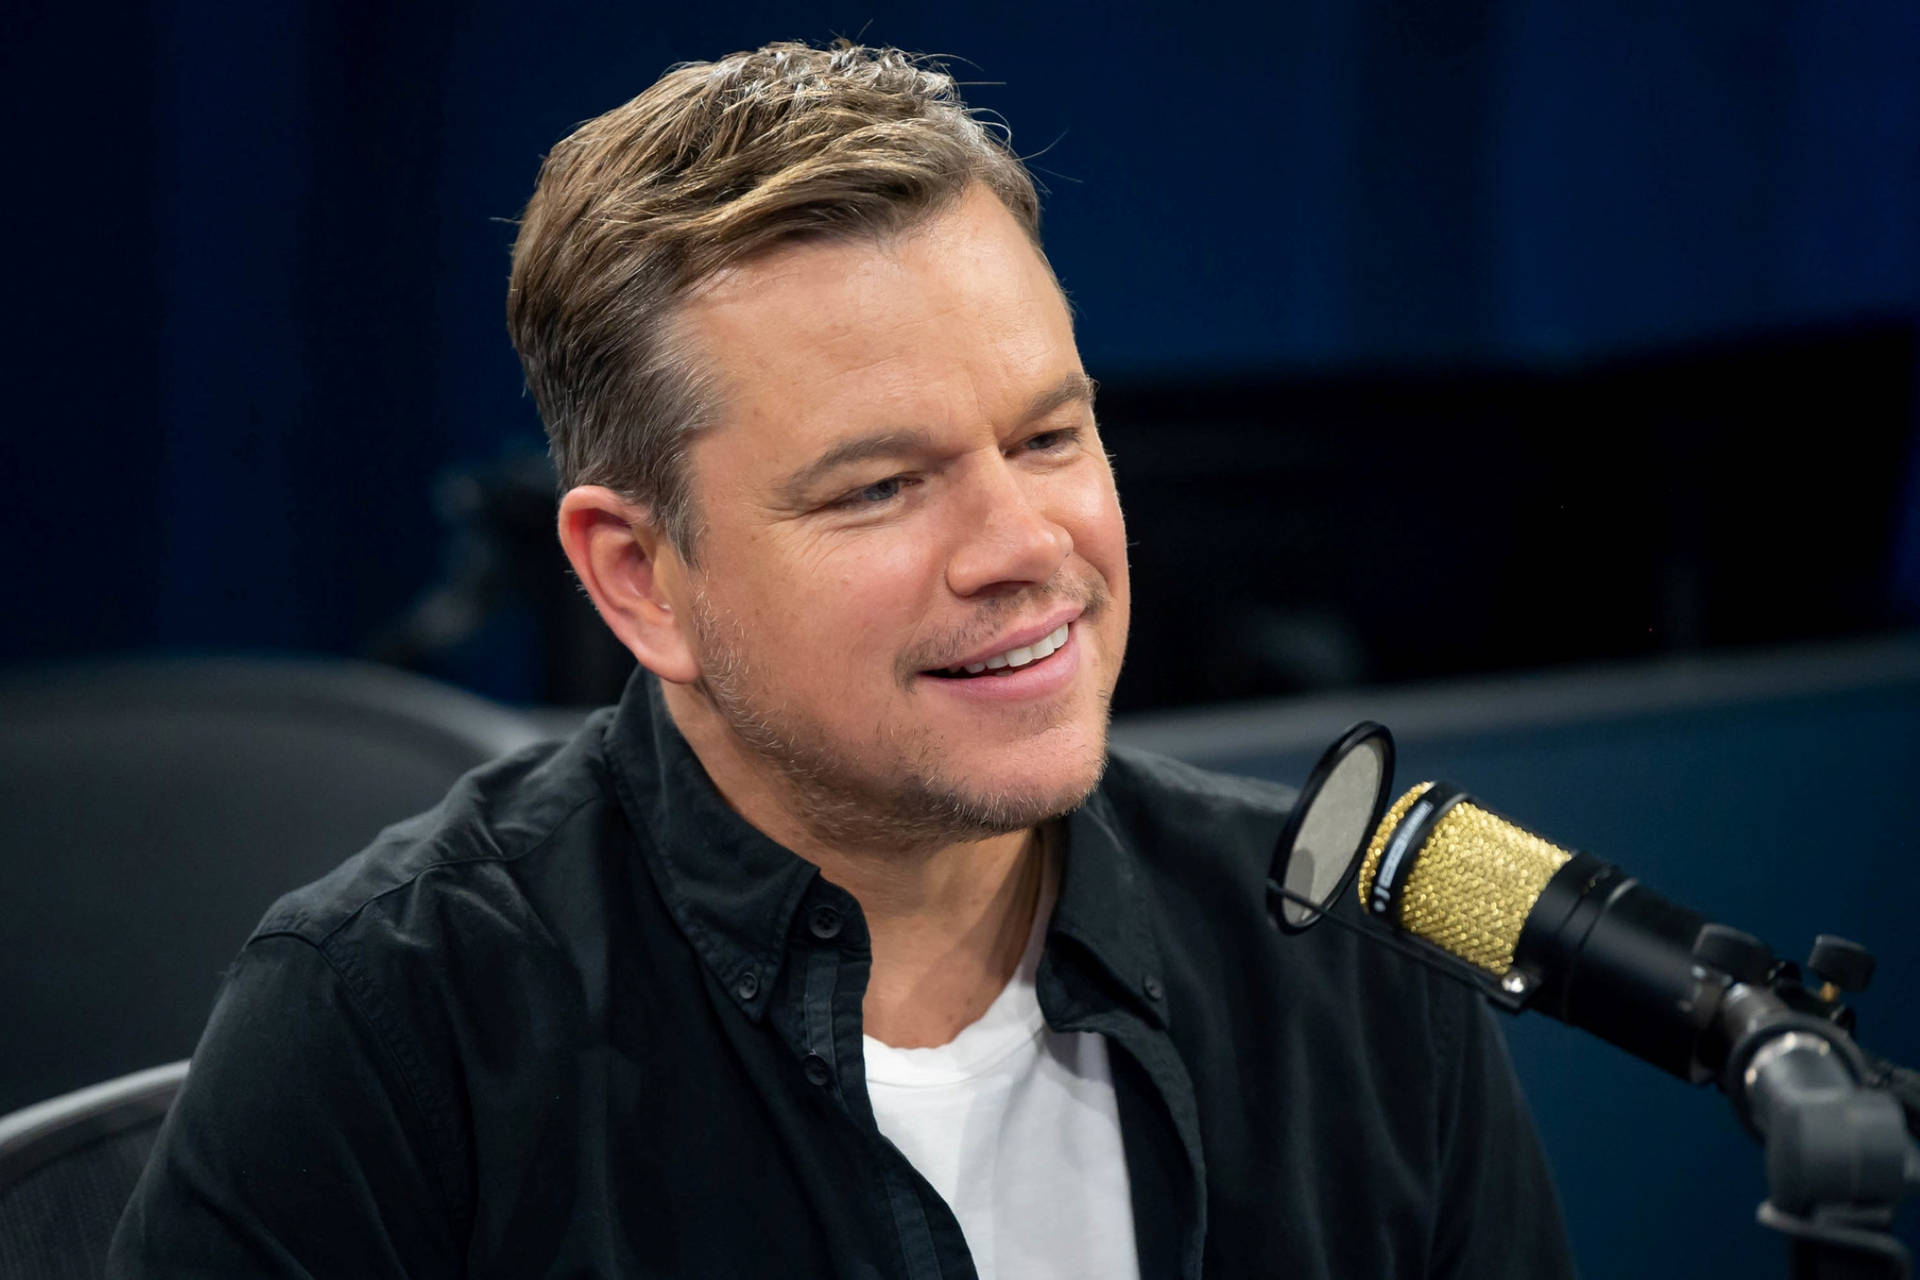 Matt Damon Dublin Radio Show 2020 Background